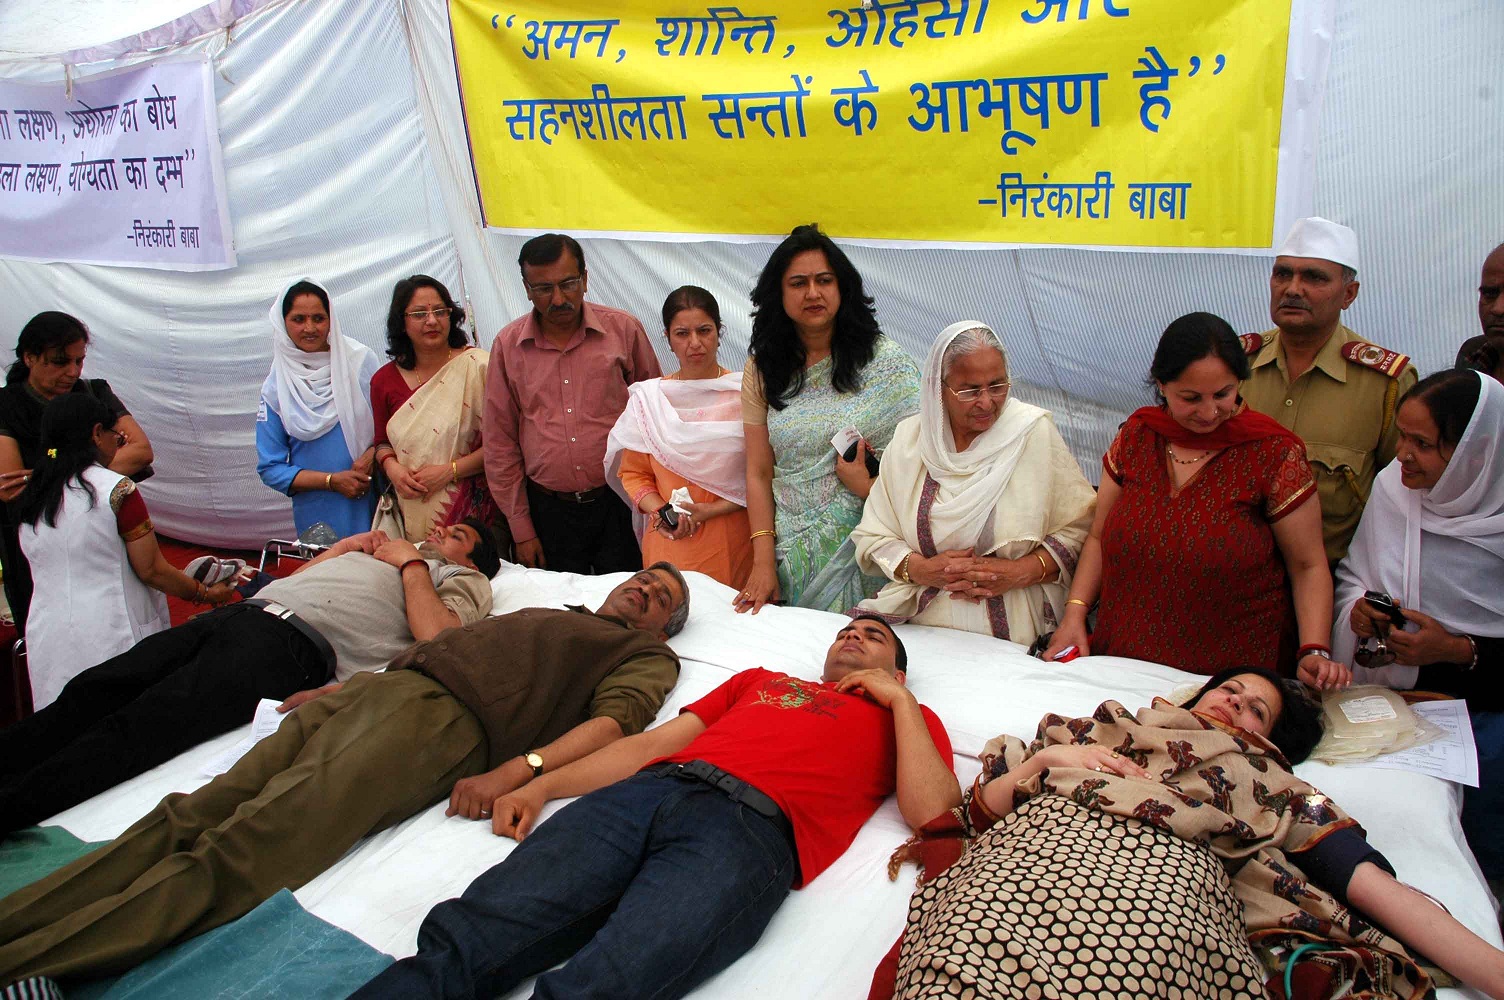 Blood donors during blood donation camp organized by Sant Nirankari Mission at Historical Ridge in Shimla on Sunday.